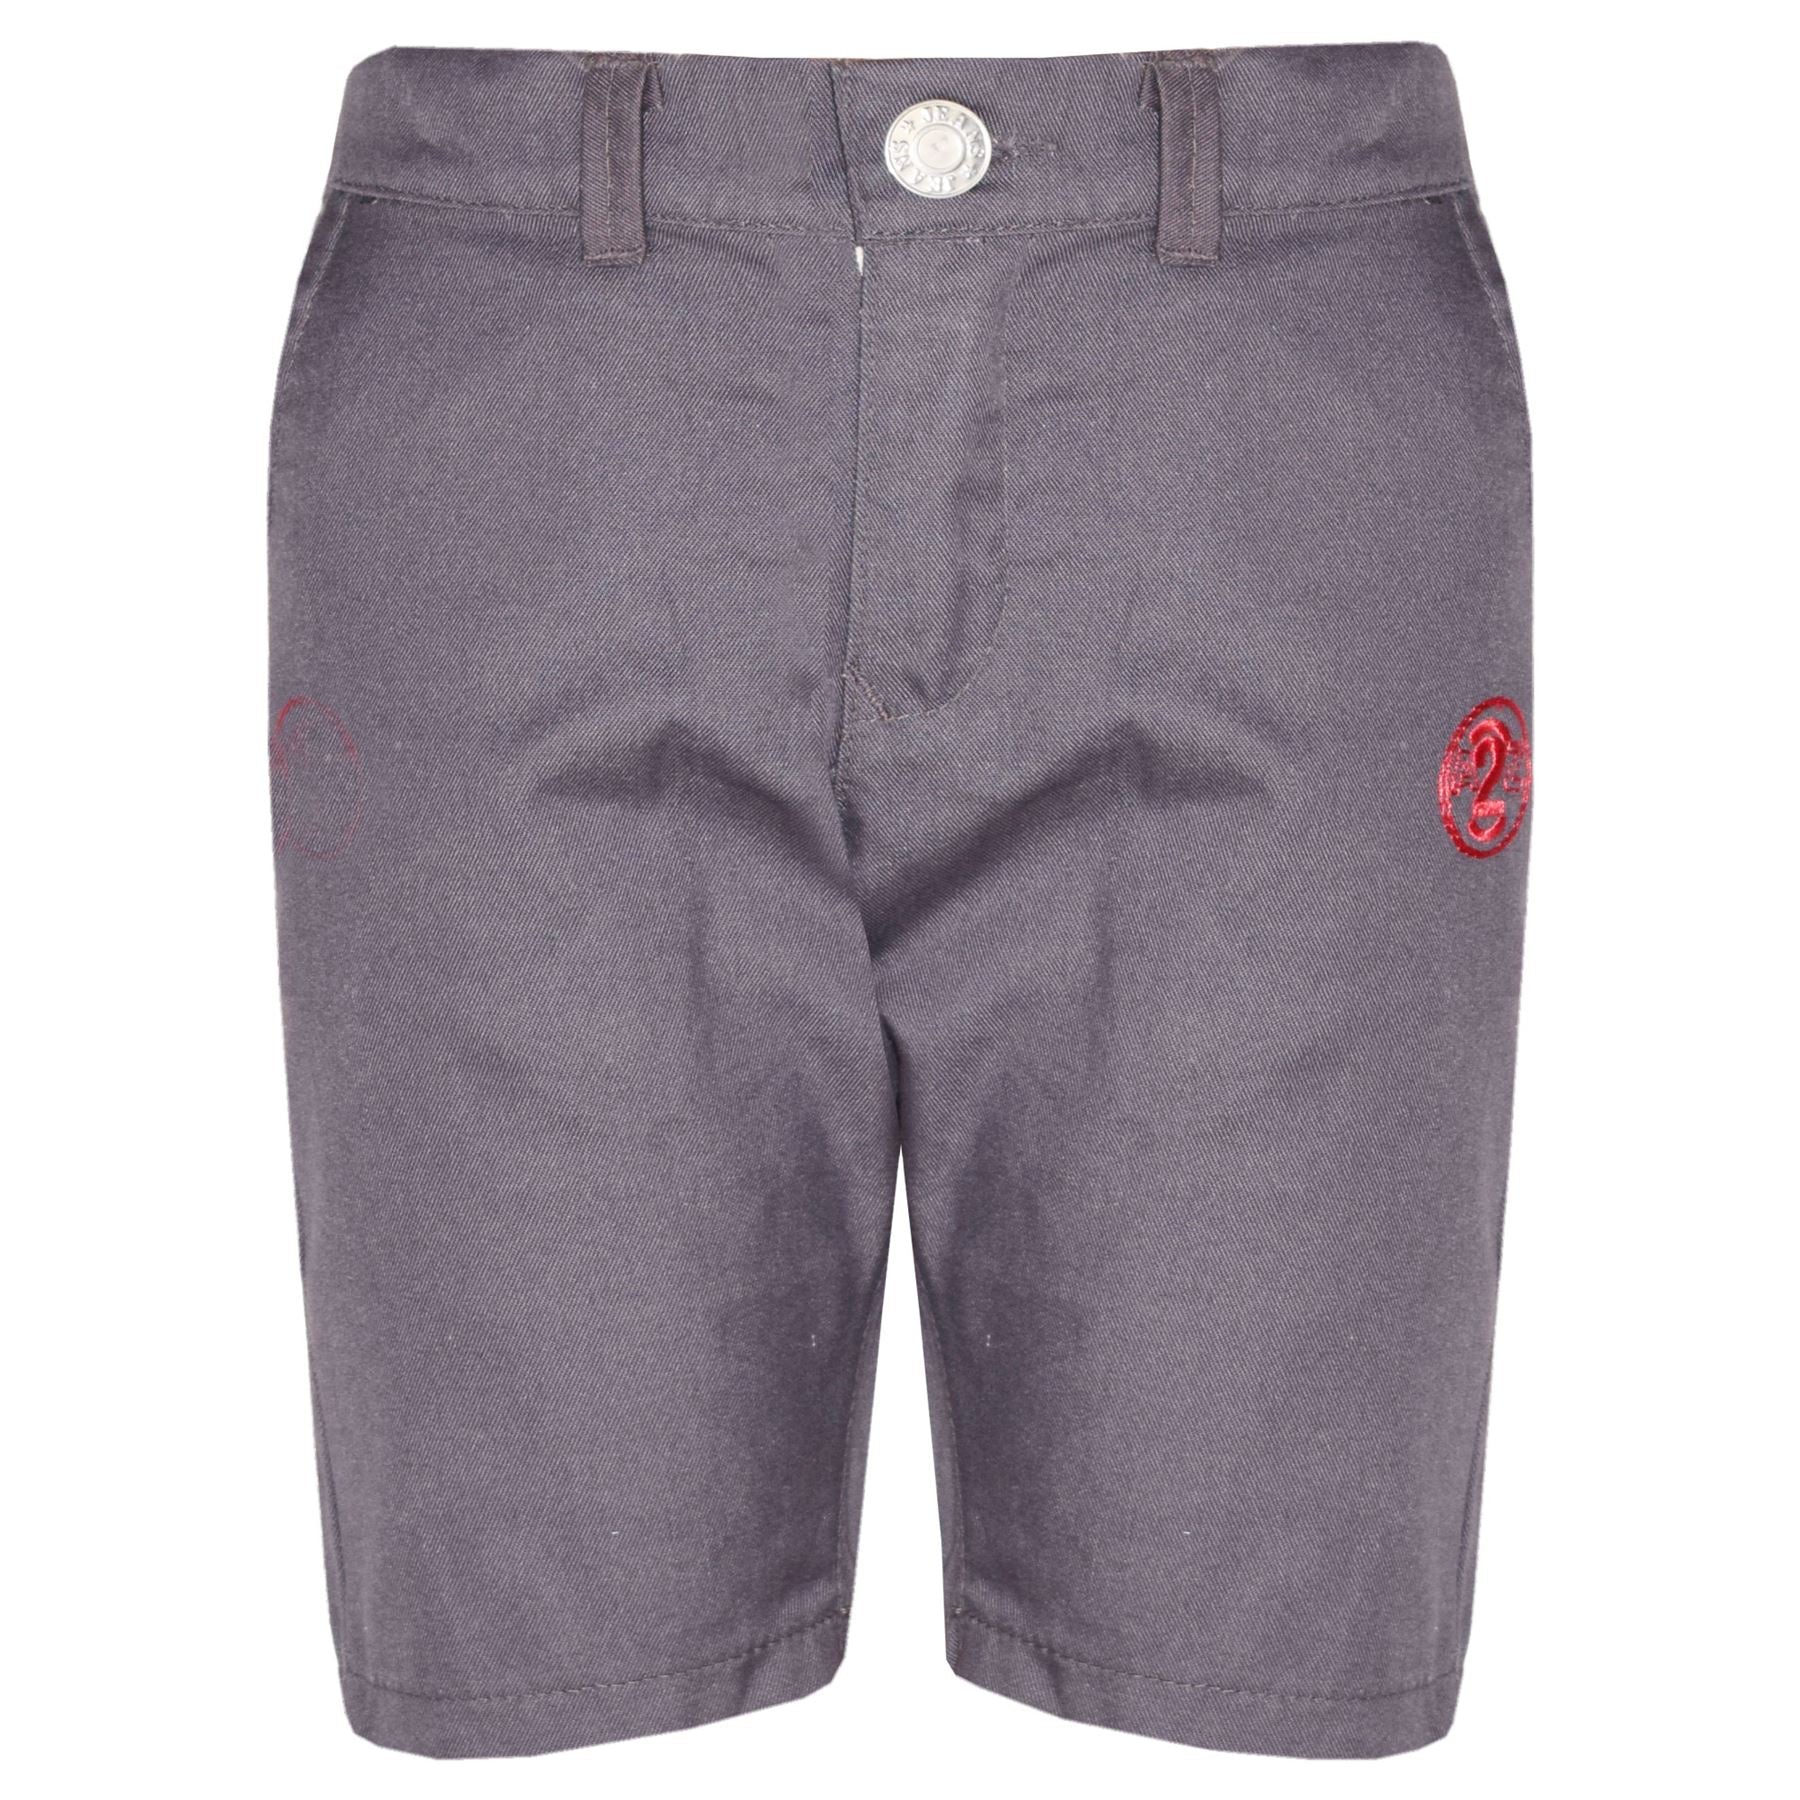 Boys Summer Cotton Shorts Grey Chino Knee Length